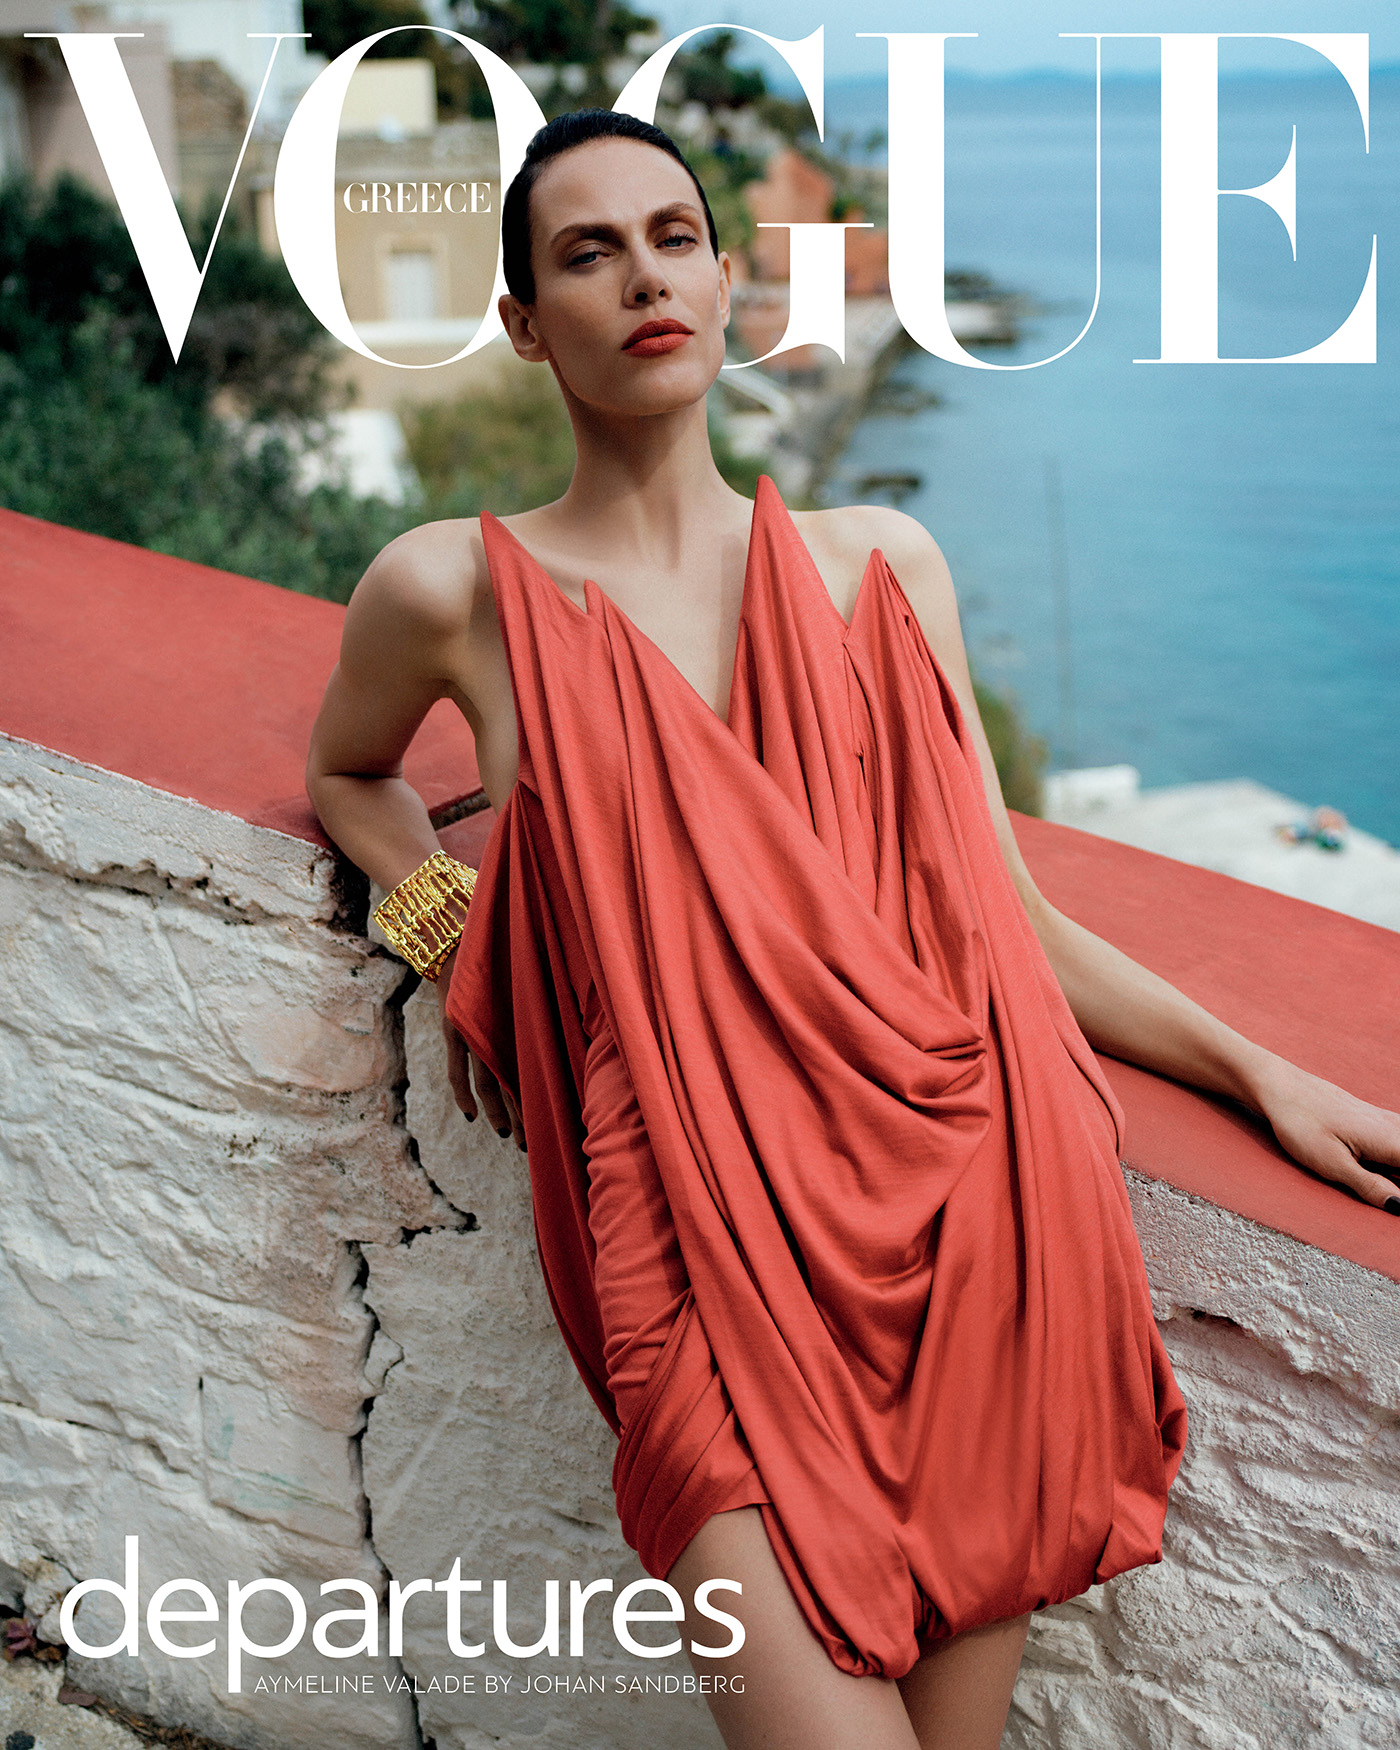 H Vogue Greece Ιουνίου έχει γεύση από ελληνικό καλοκαίρι-1